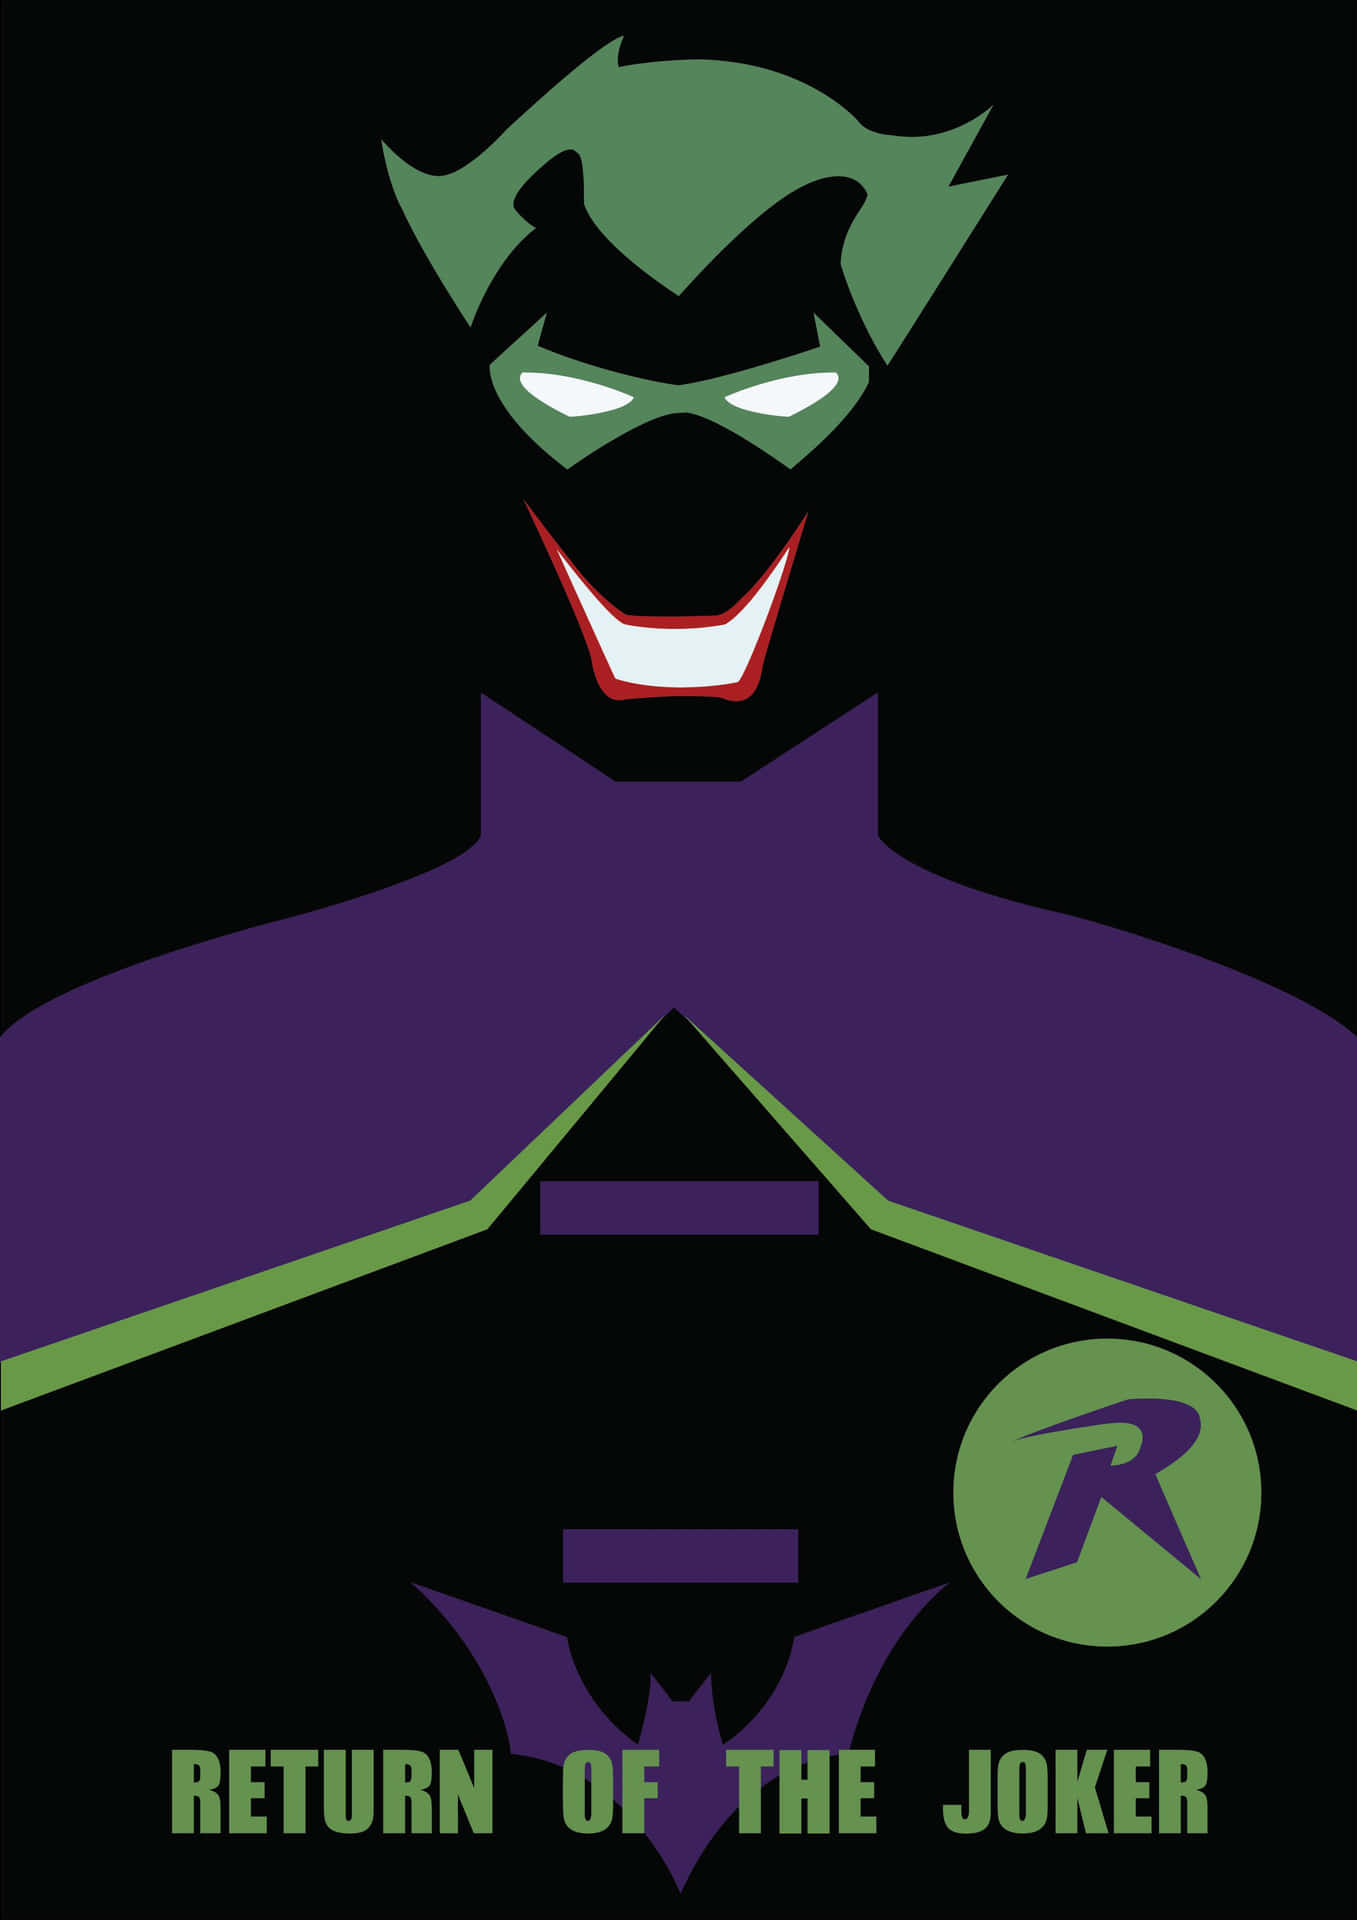 batman beyond return of the joker poster